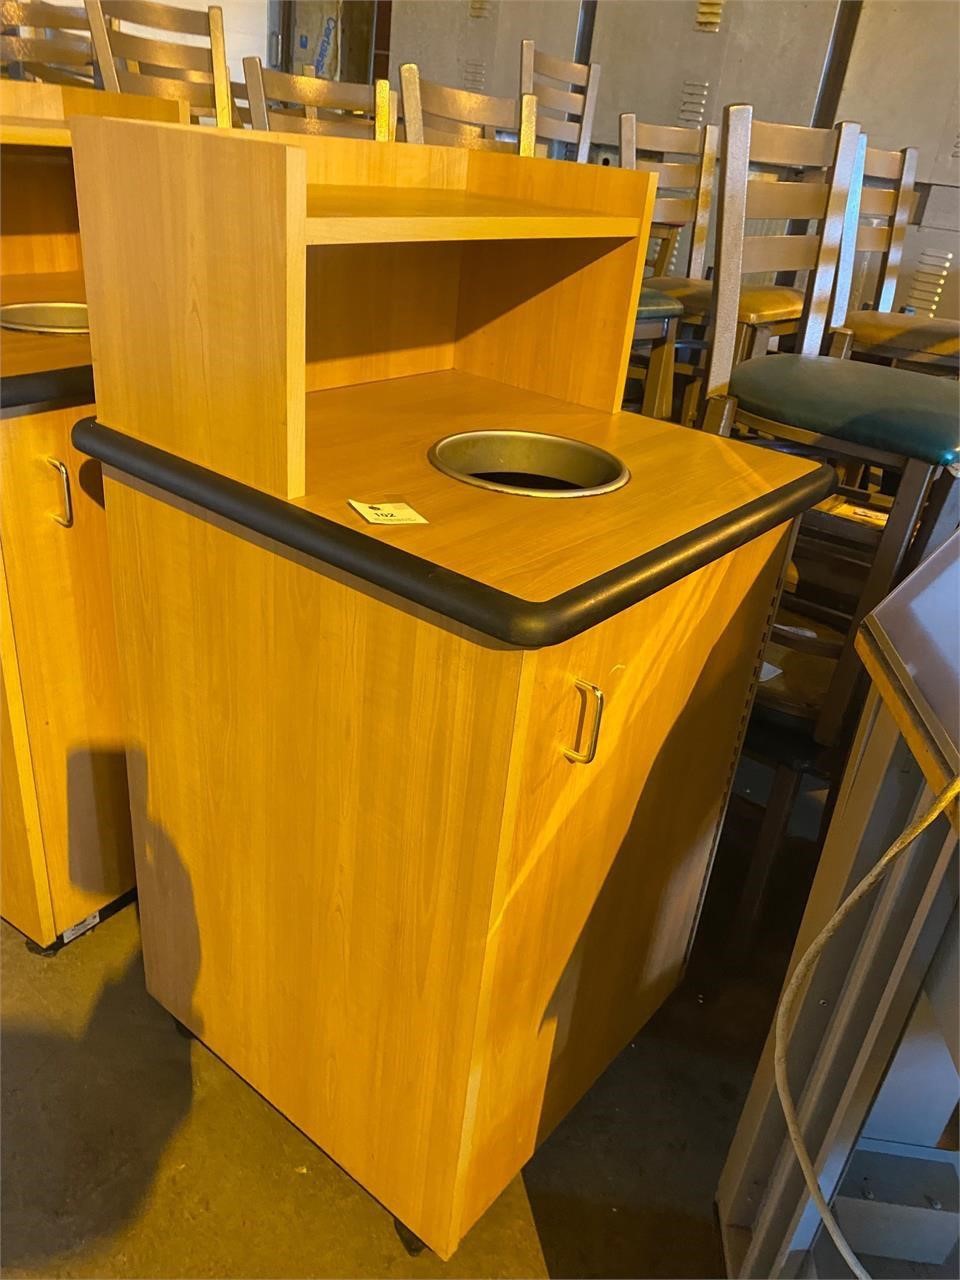 Pecan trash cabinet without lower bin